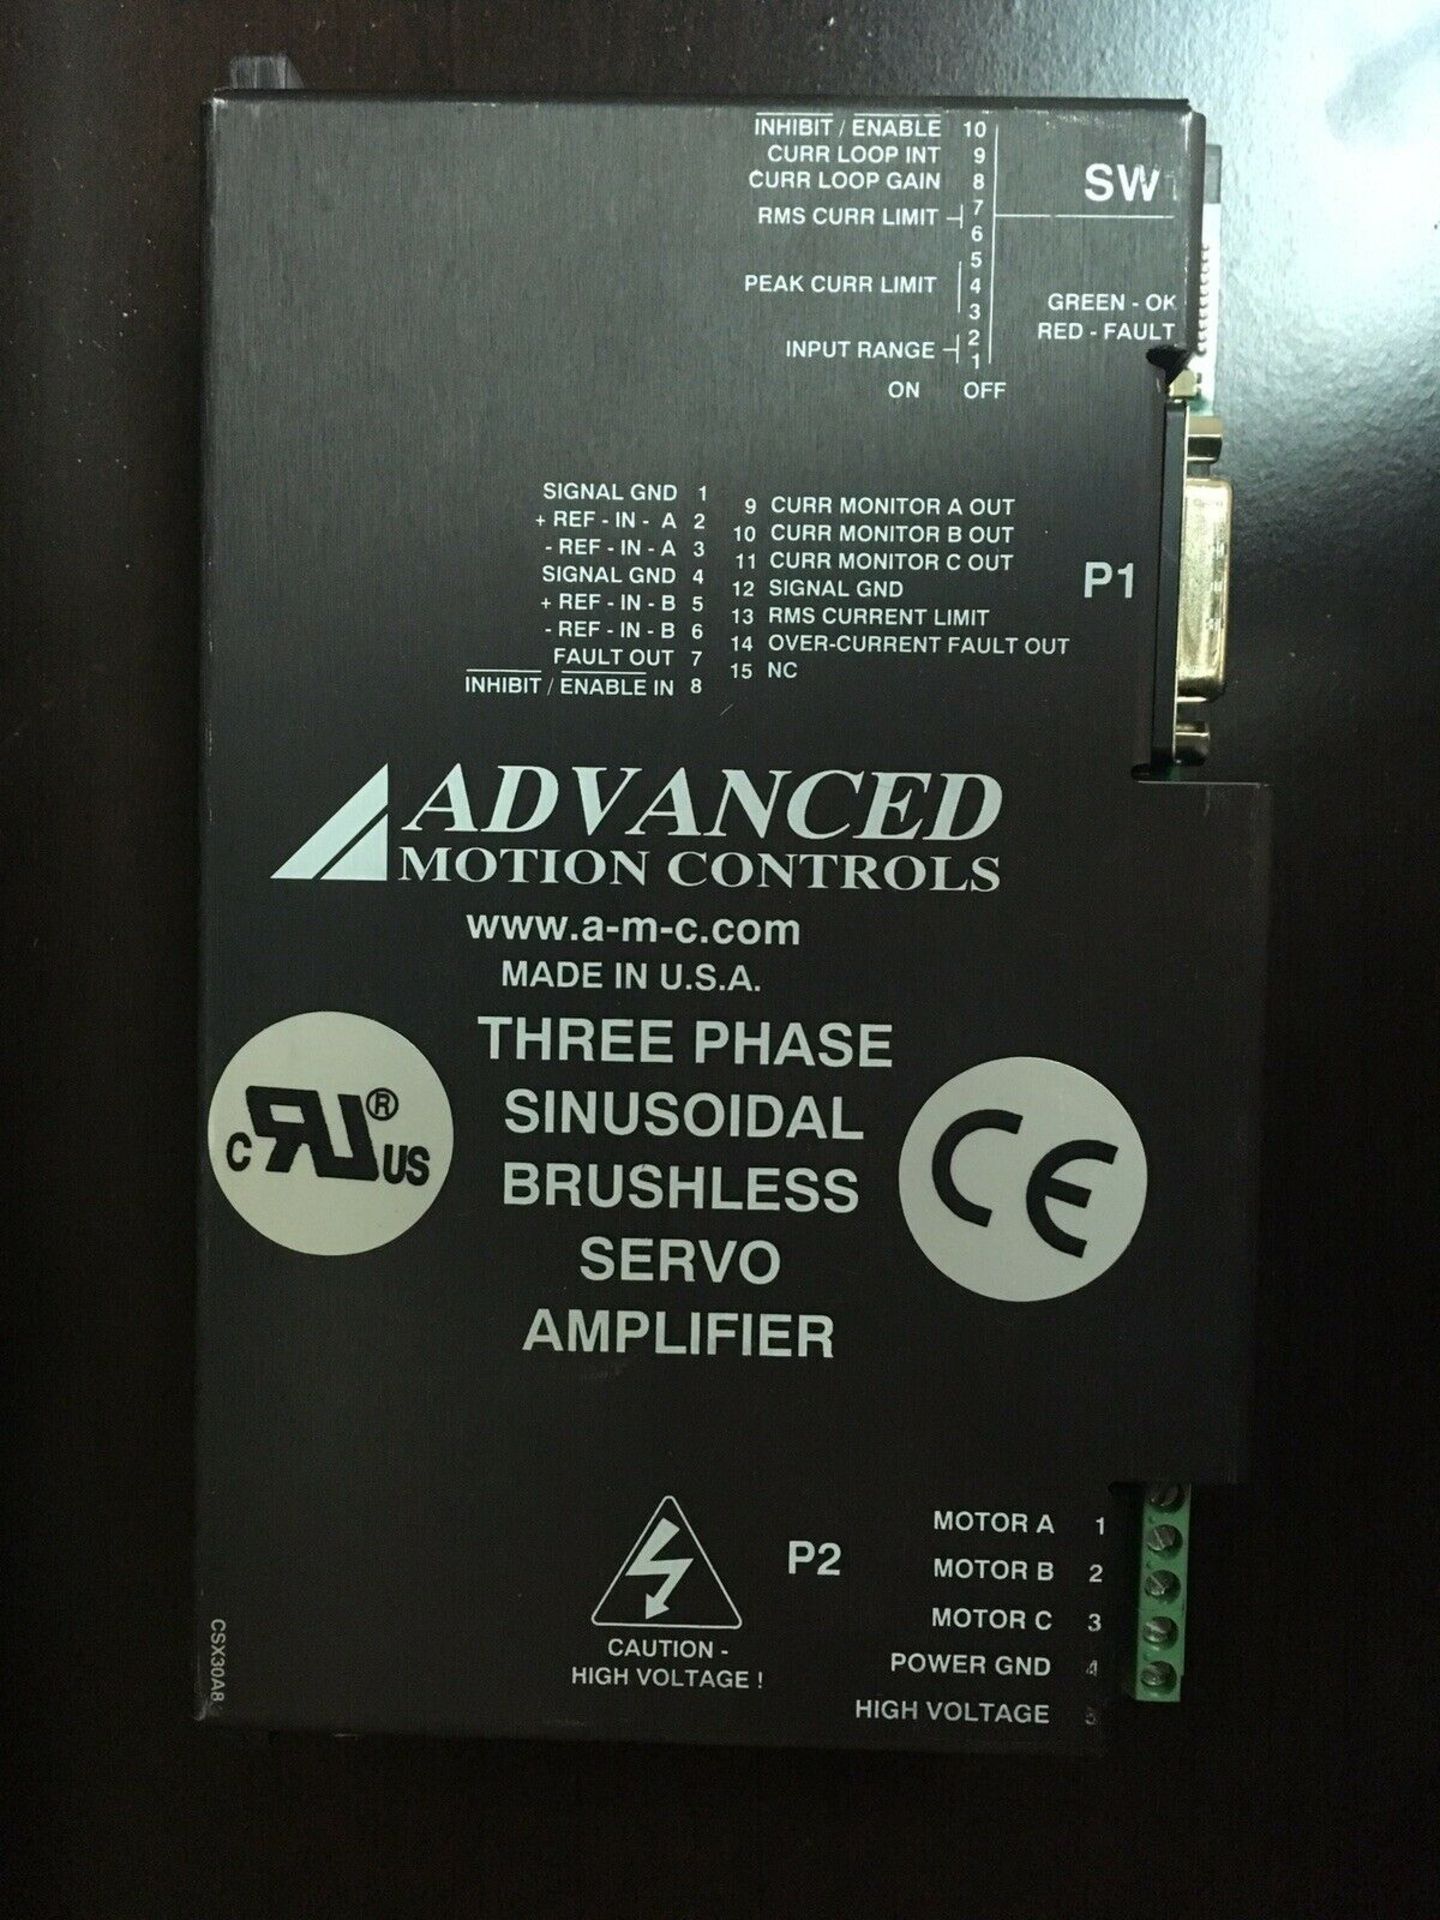 AMC Sinusoidal Brushless servo Amplifier